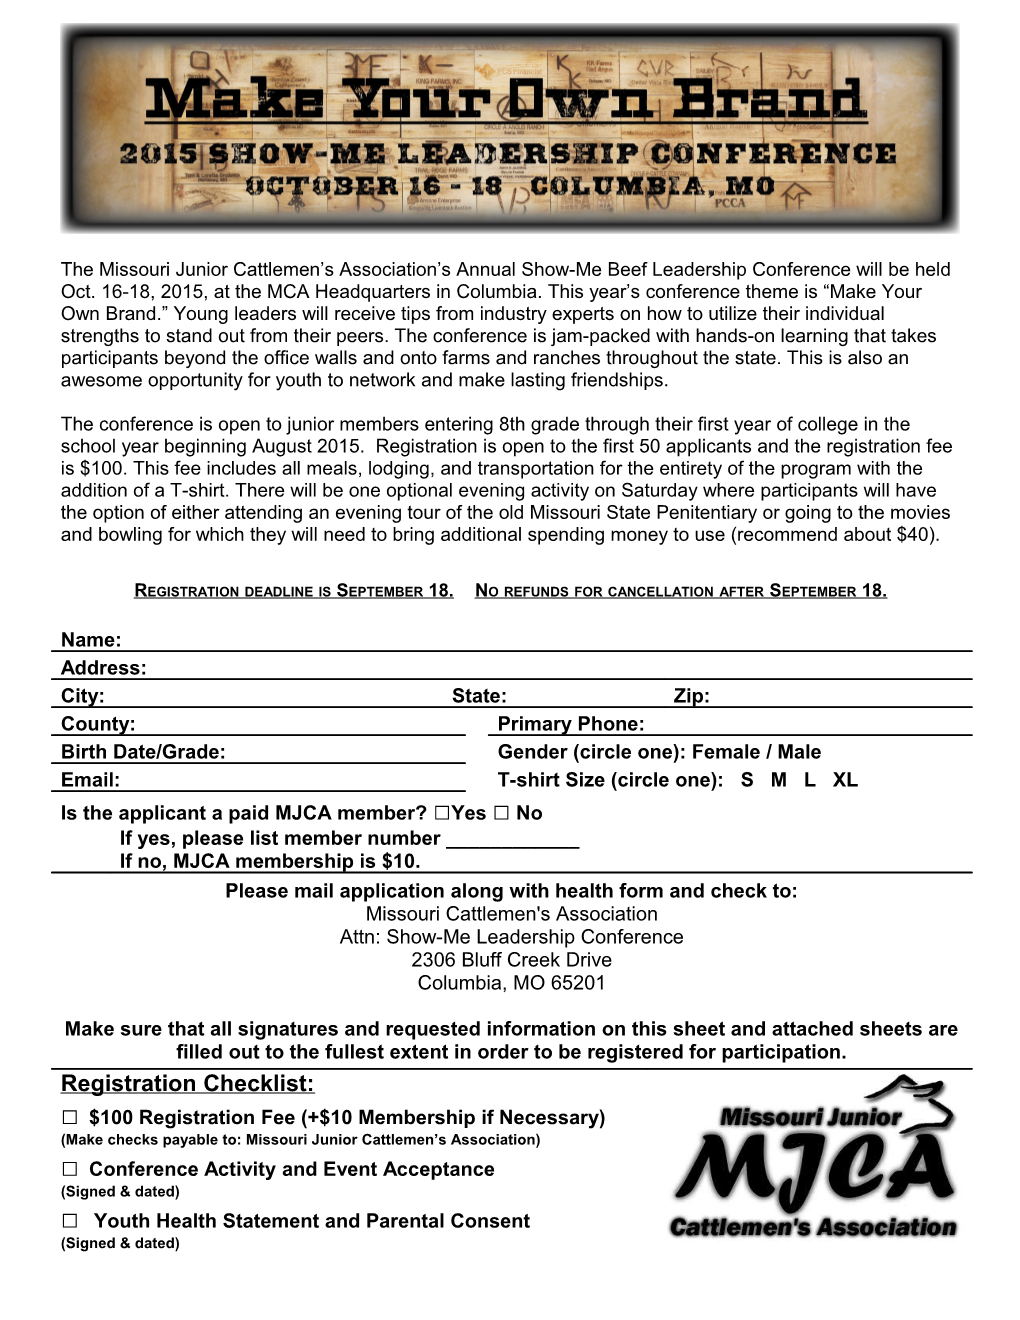 Missouri Cattlemen's Association/Missouri Junior Cattlemen S Association Programs s1